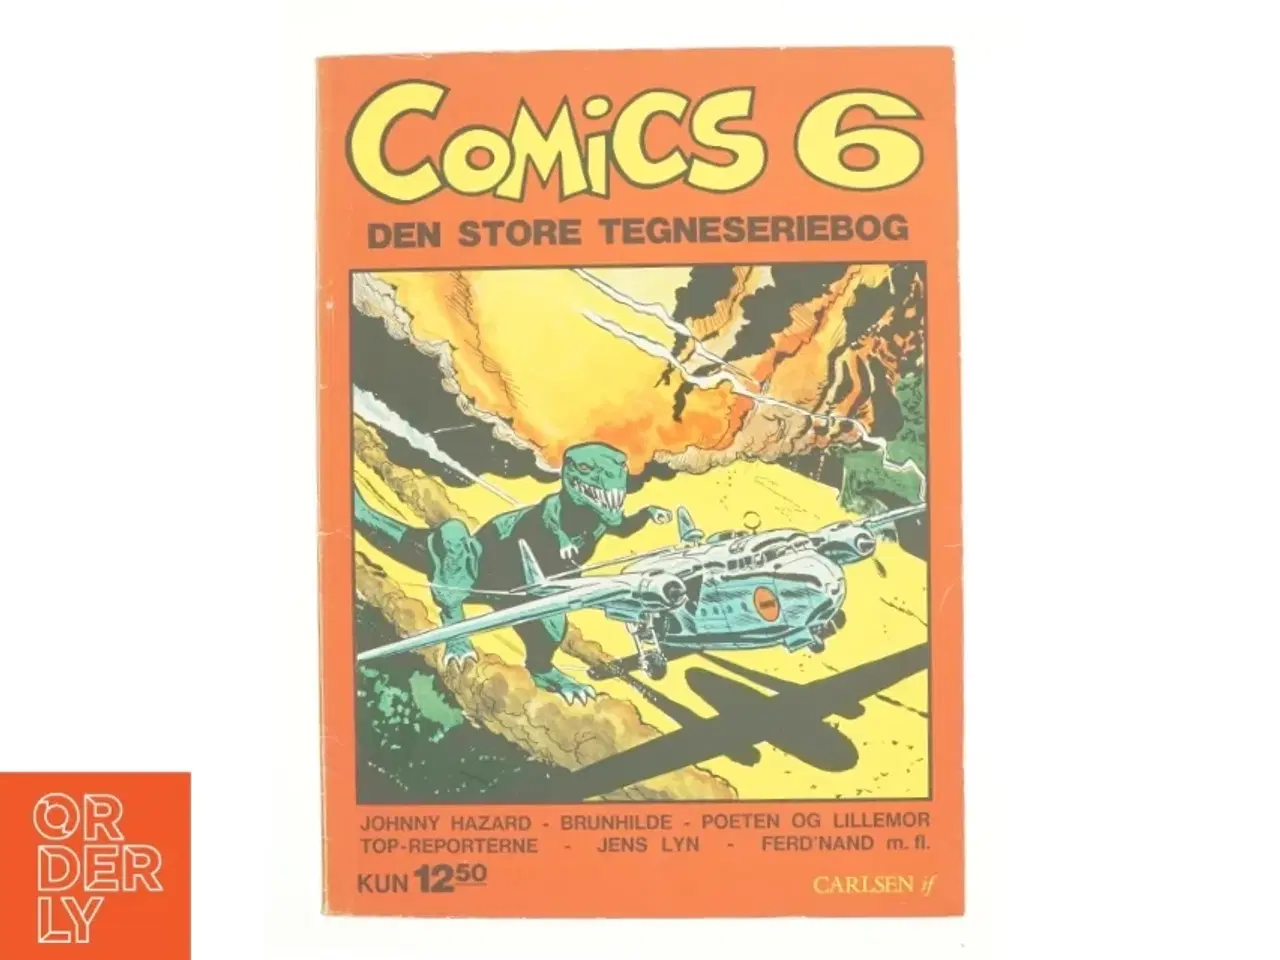 Billede 1 - Comics 6, den store tegneseriebog